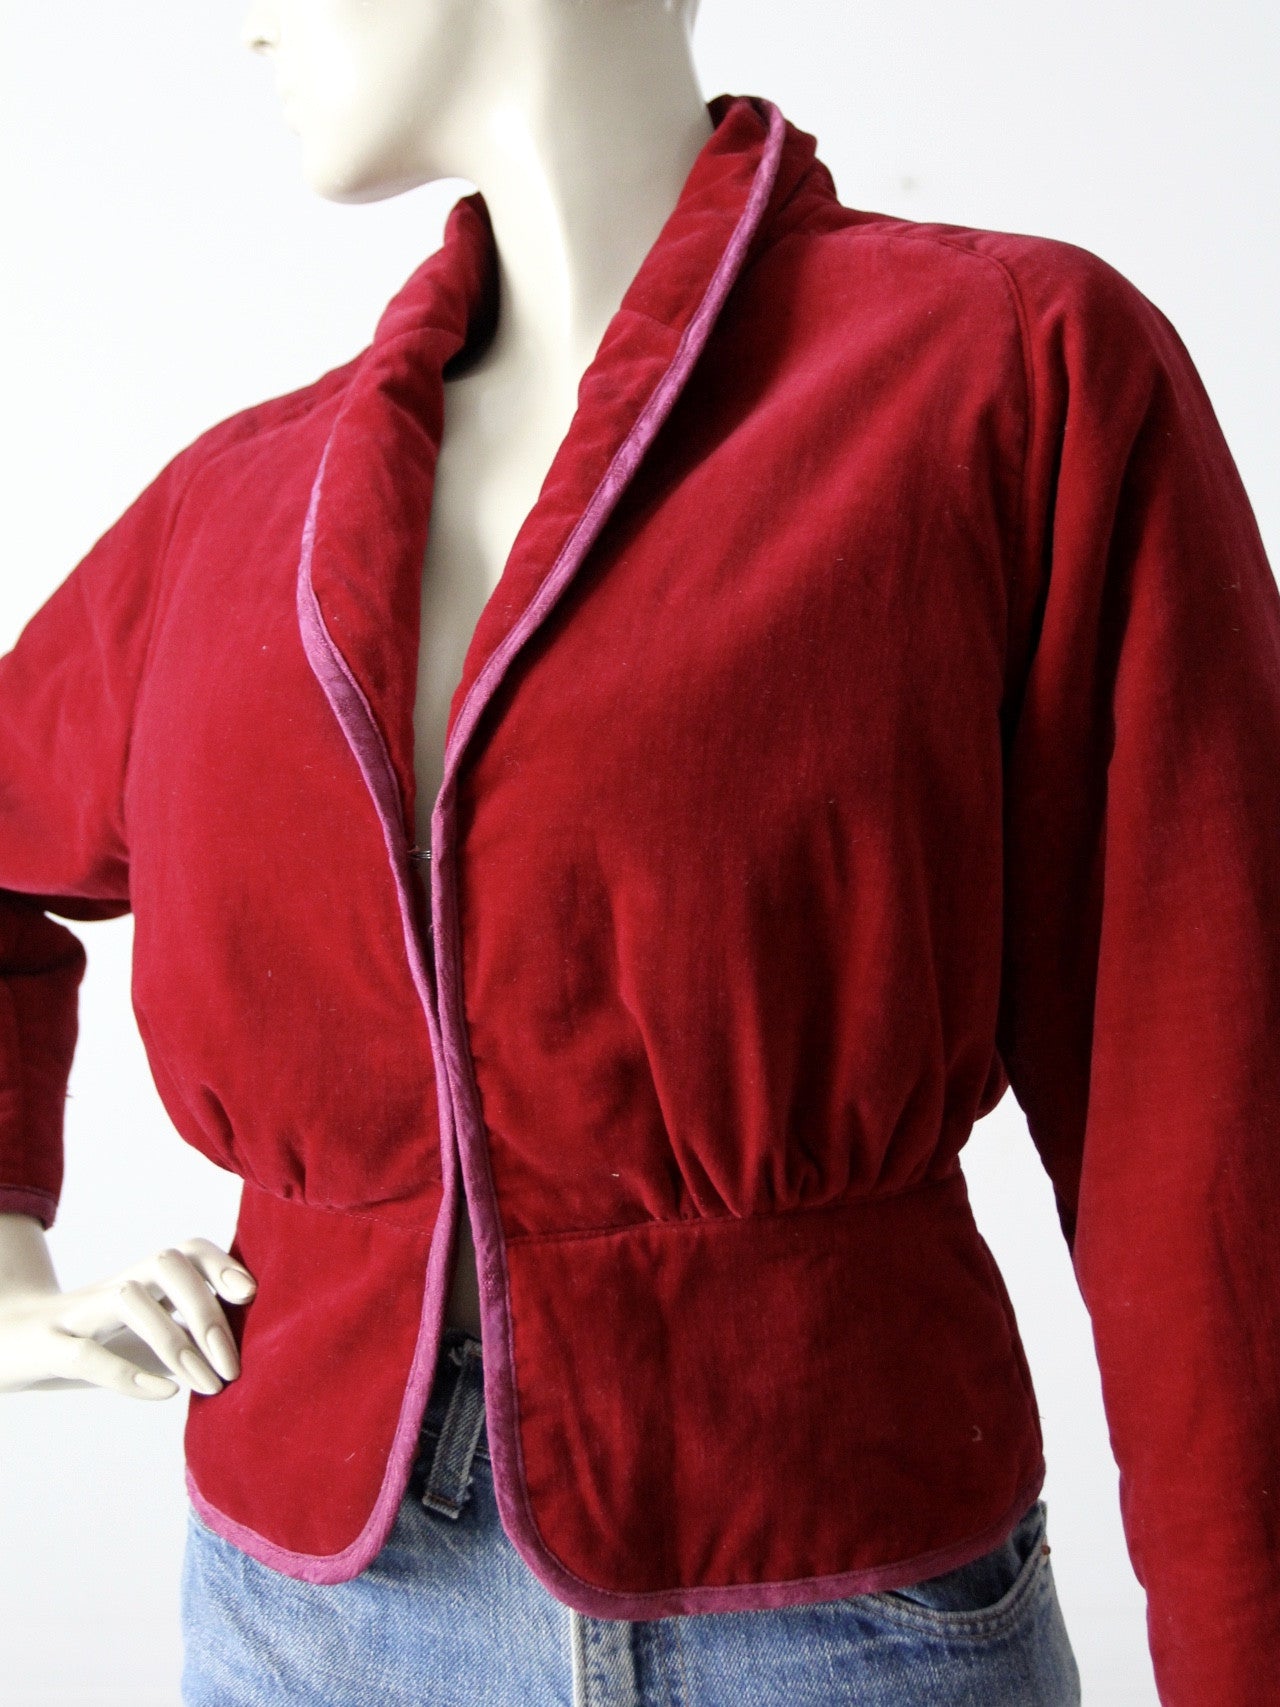 vintage velvet jacket with swan appliqué